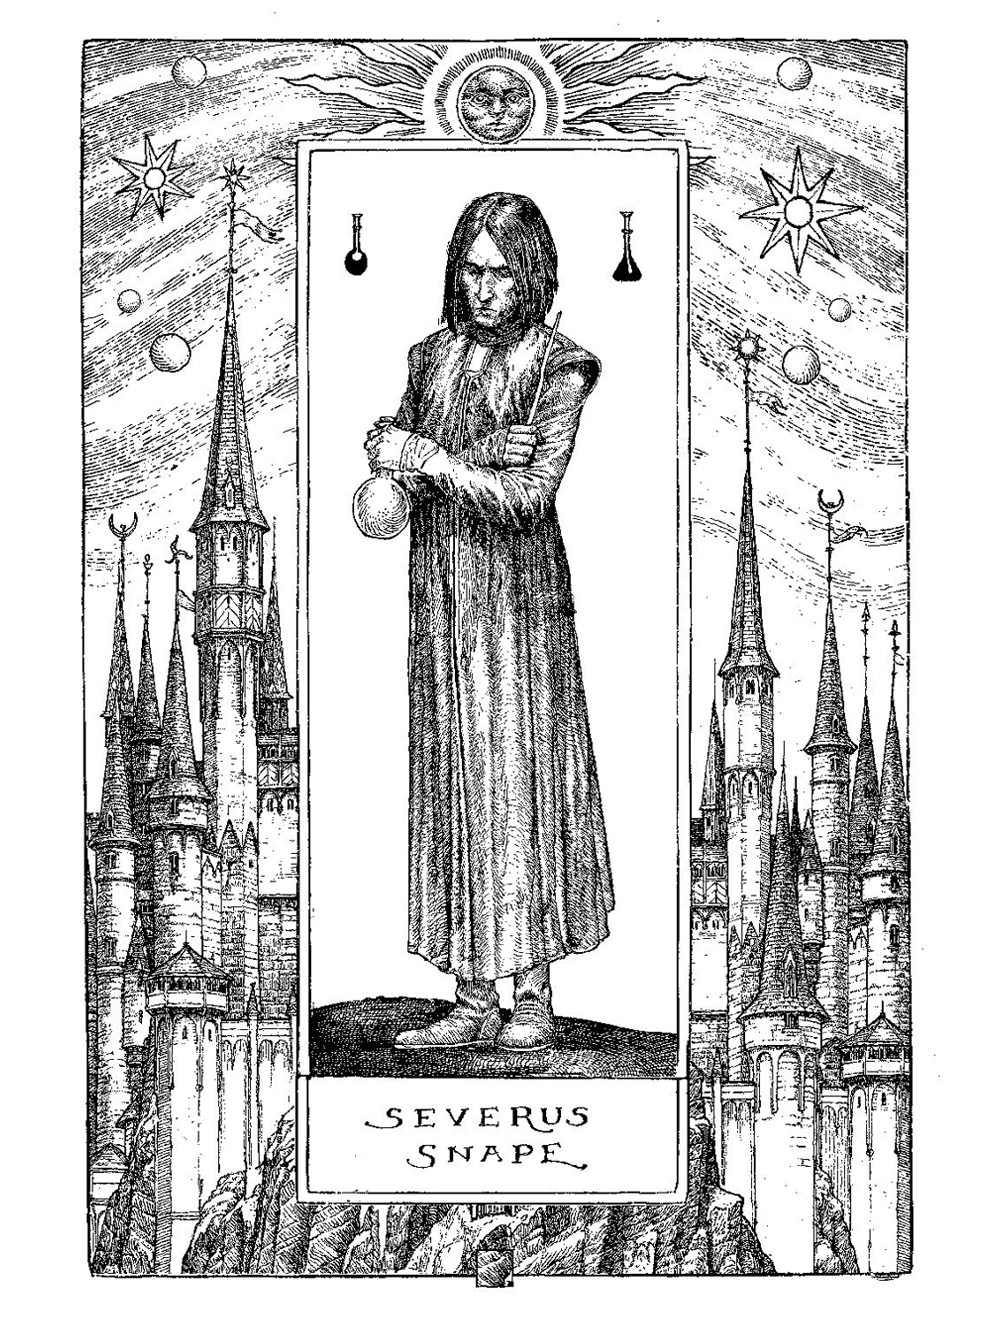 Severus Snape (house editions)